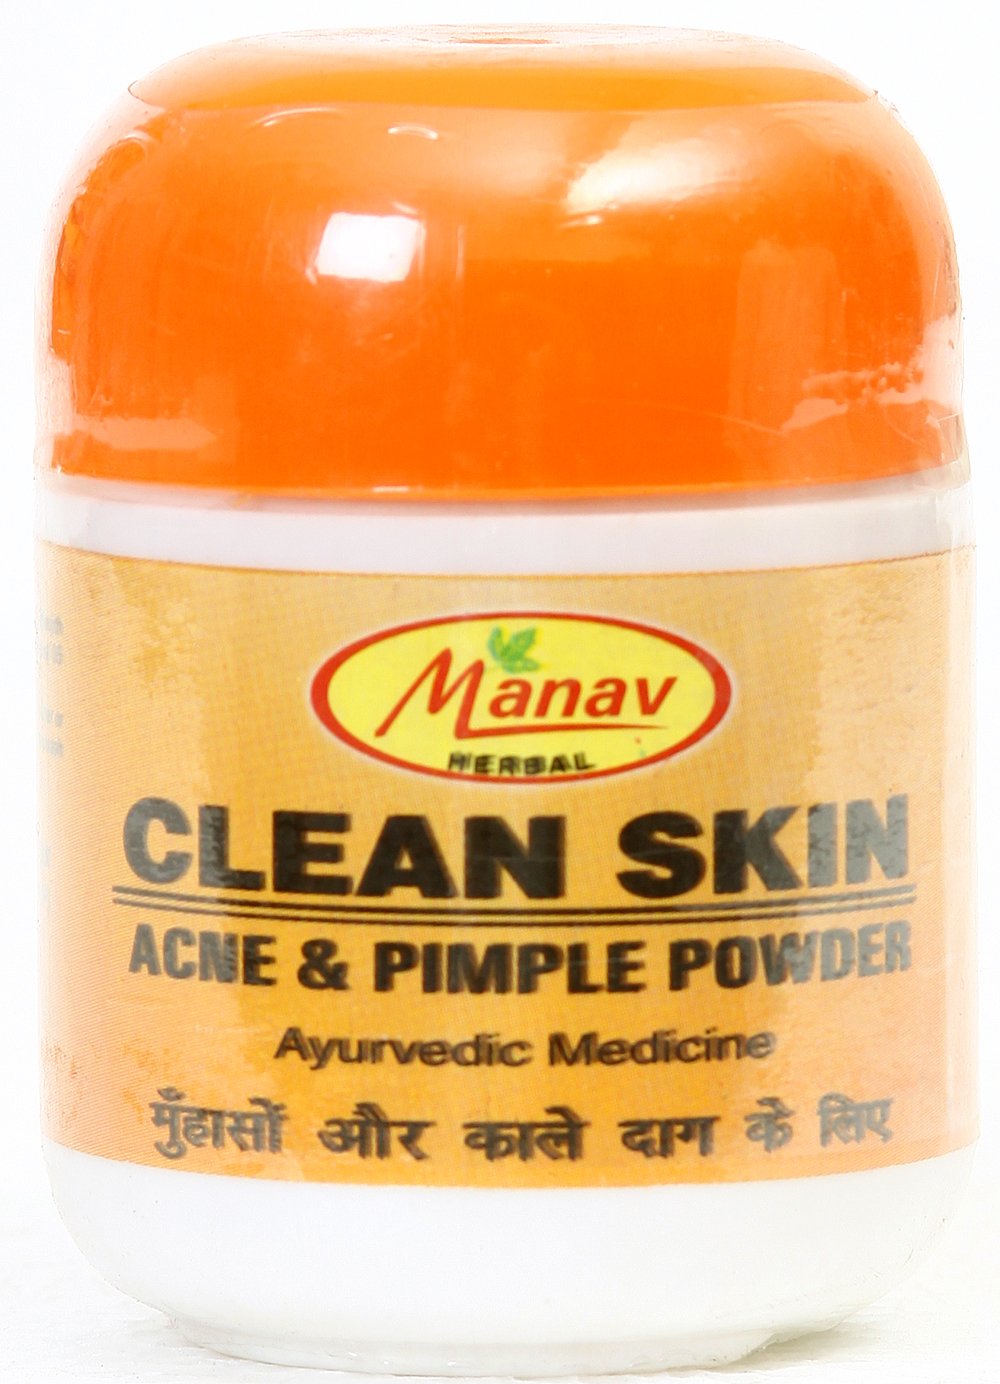 Manav Herbal Clean Skin (Acne & Pimple Powder) - book cover